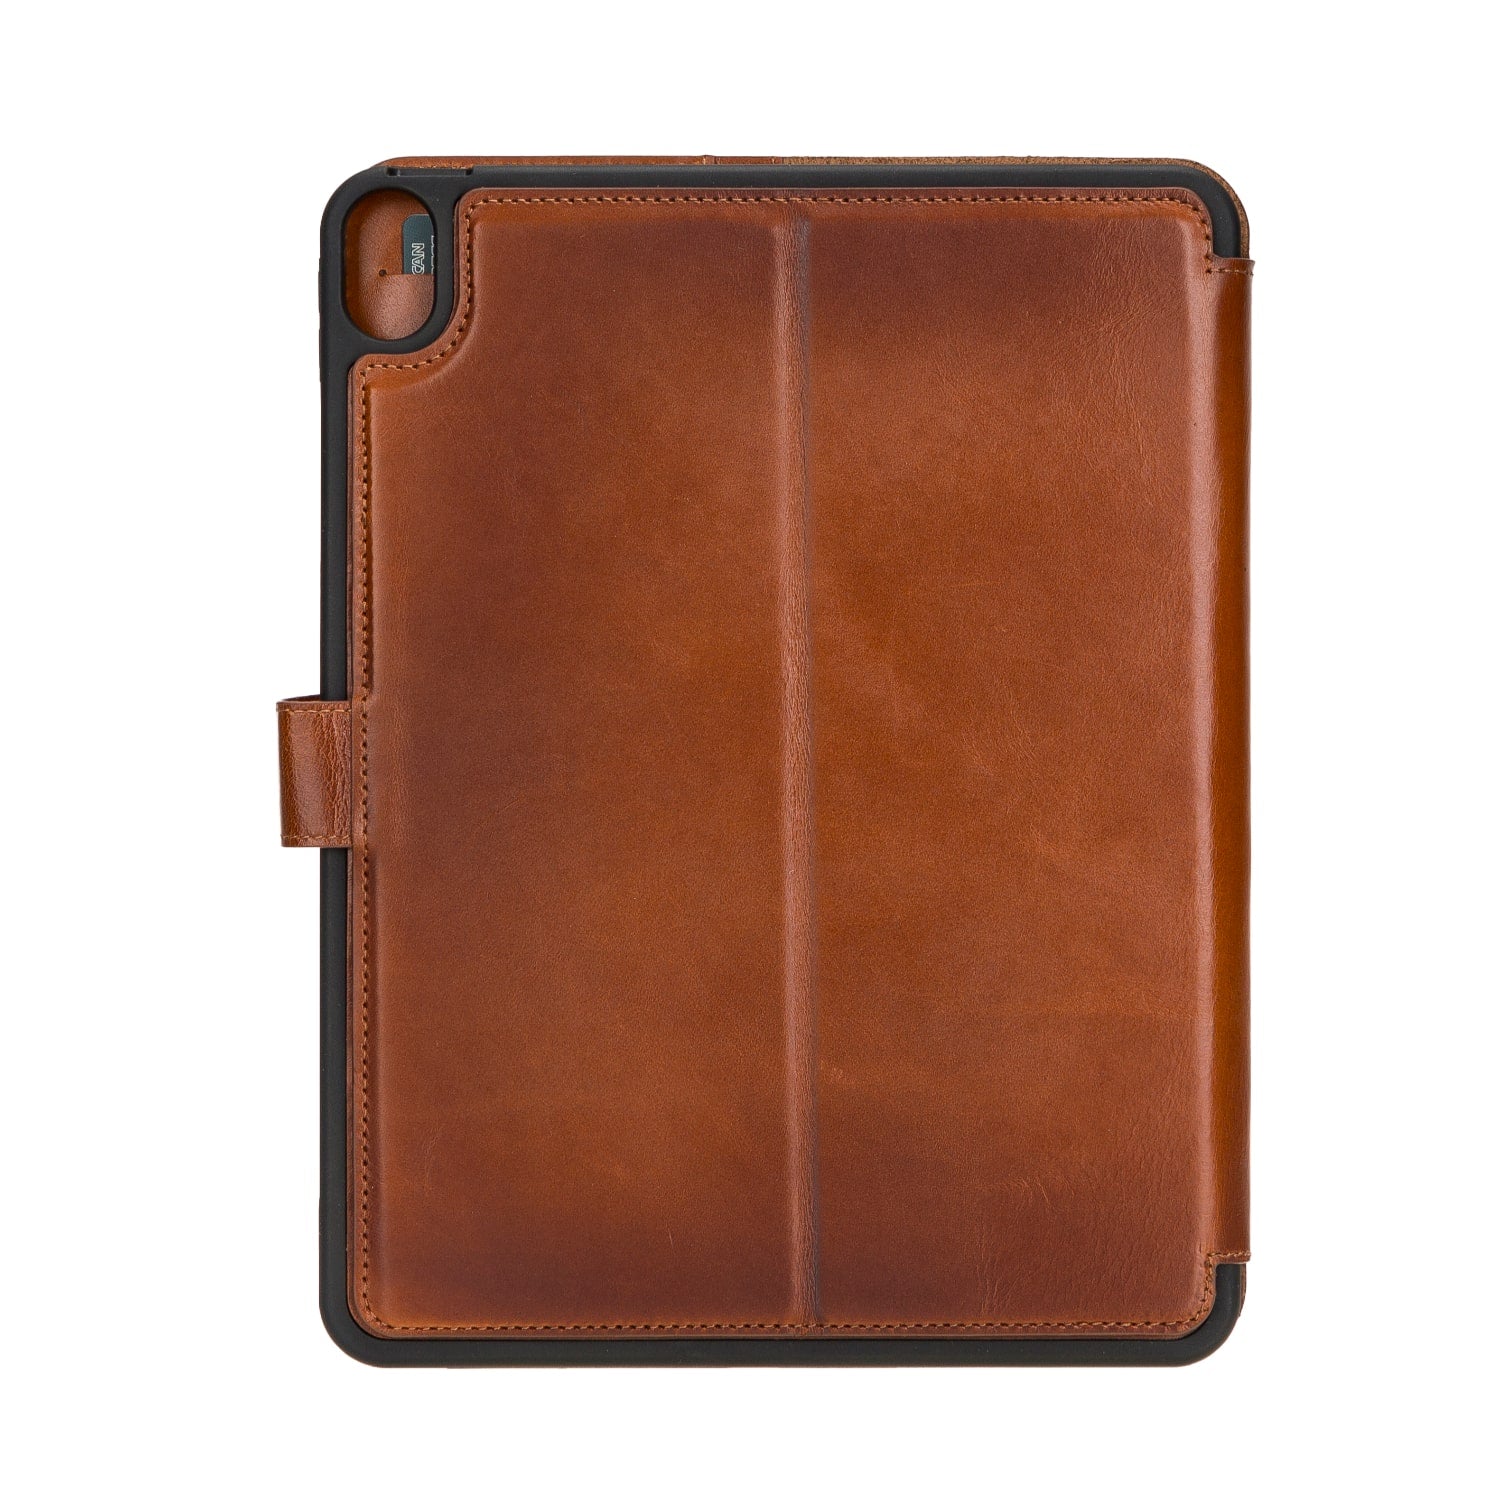 Brown Leather iPad Air 10.9 Inc Smart Folio Case with Apple Pen Holder - Bomonti - 4